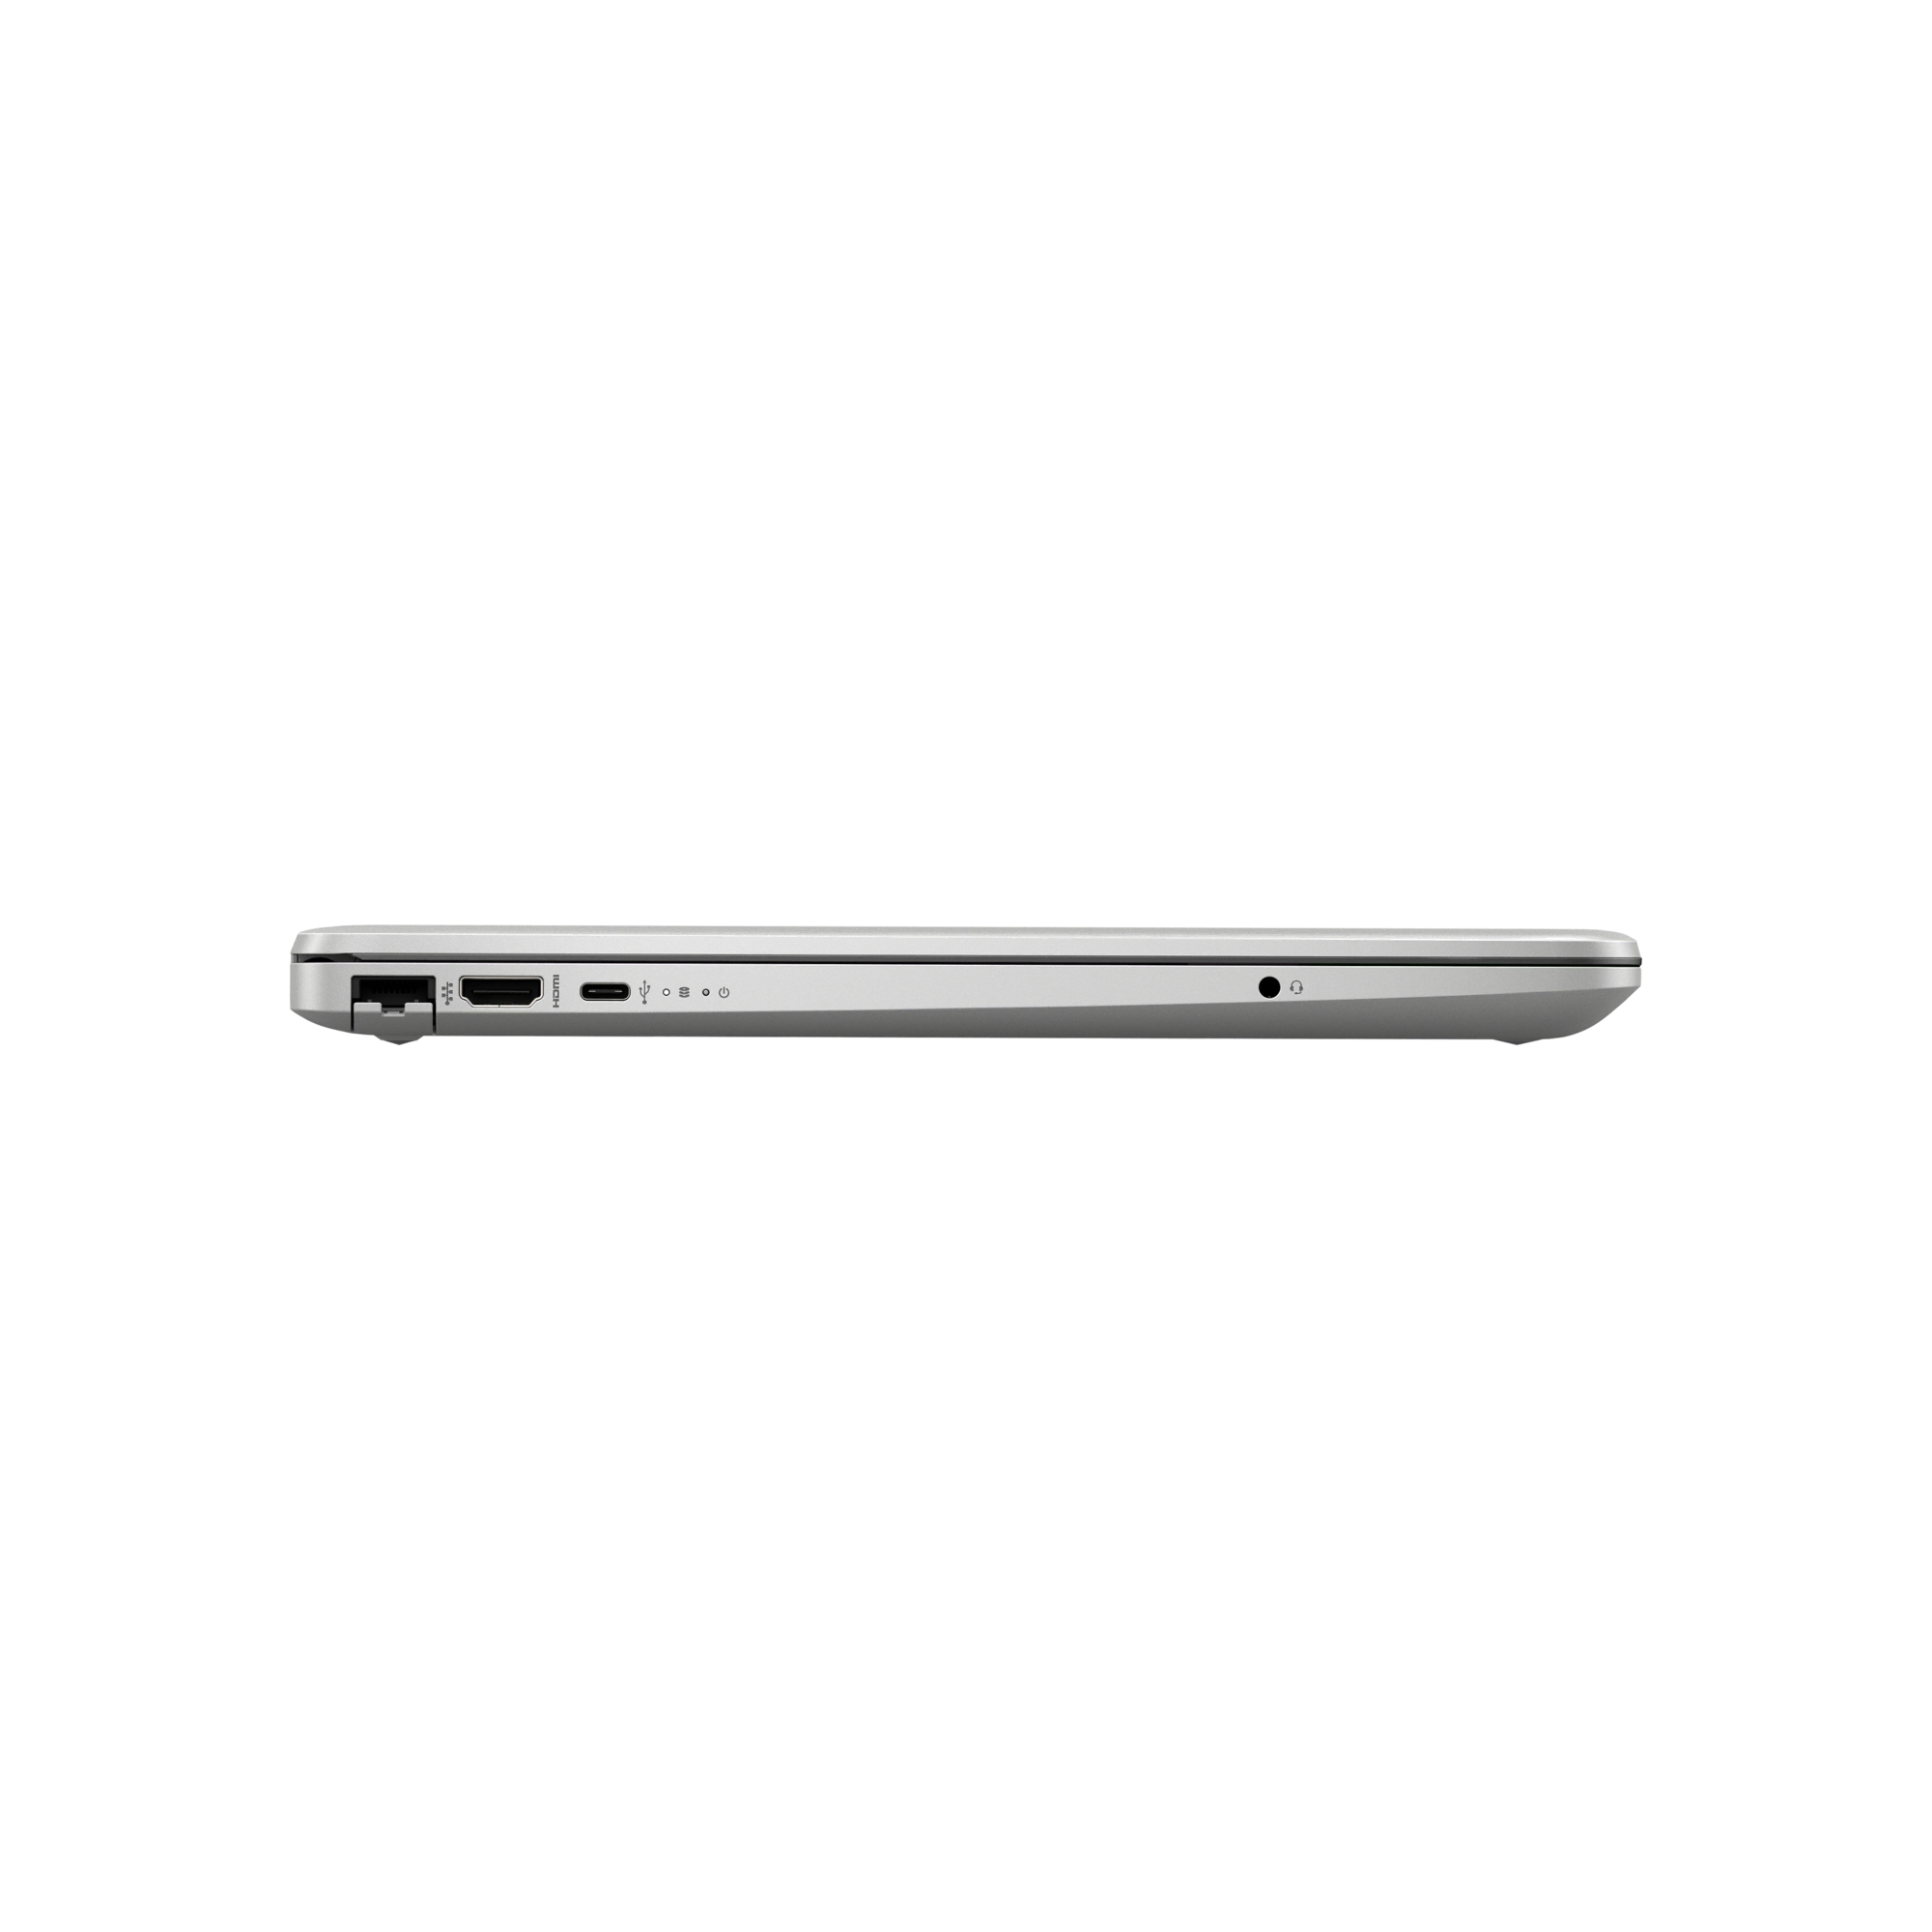 HP i5 8-256GB - 723P9EA Laptop